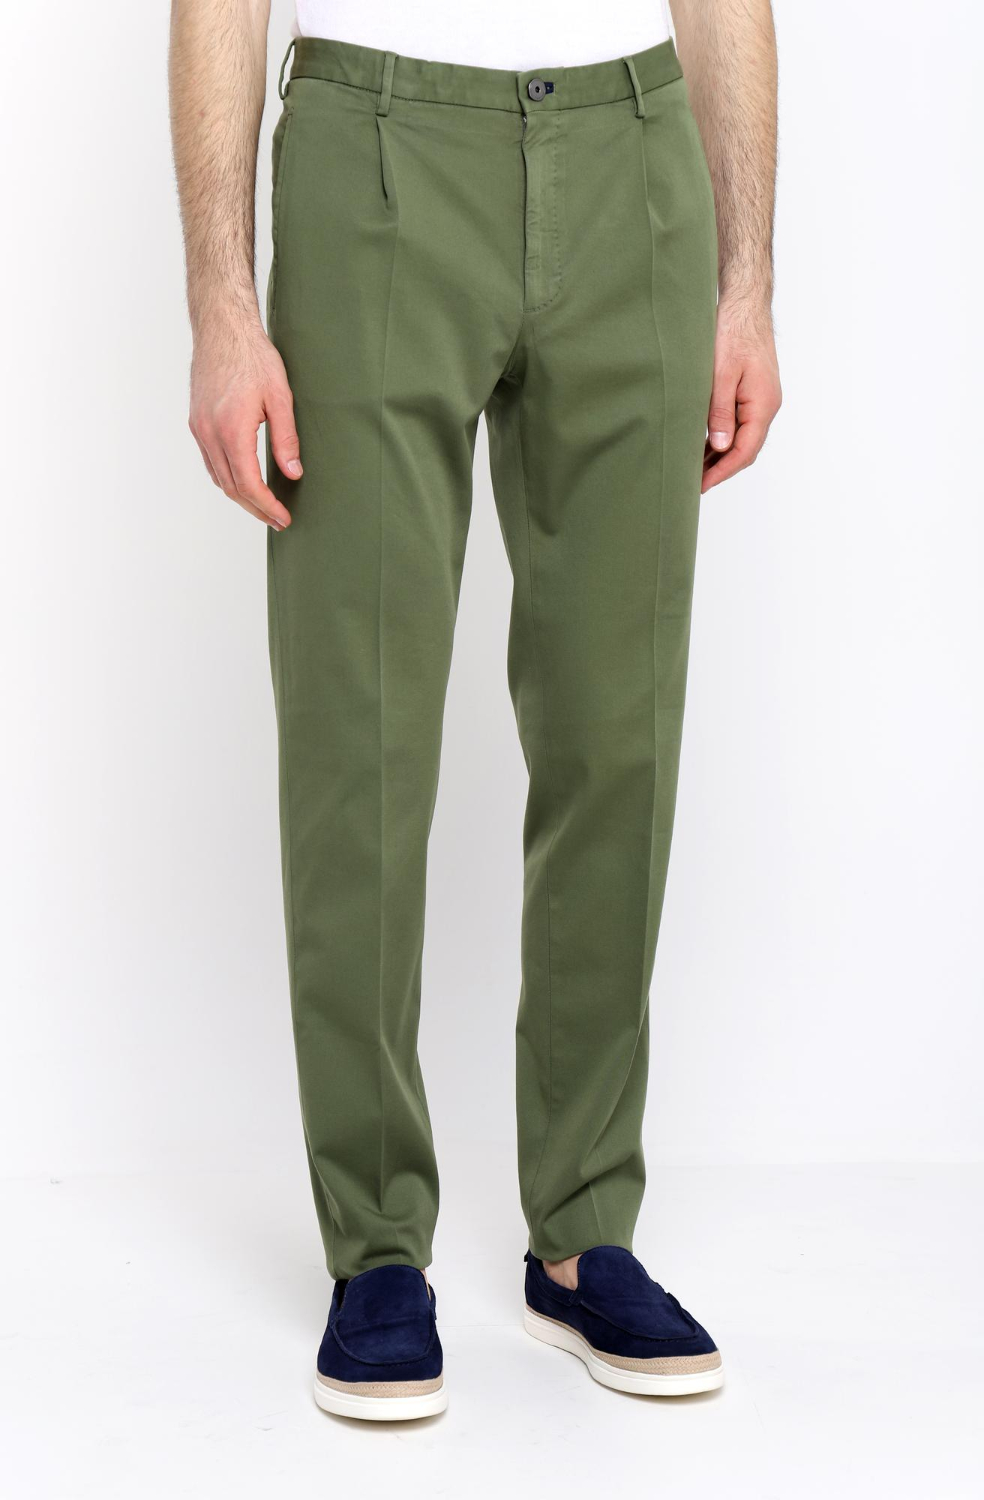 Green pants style